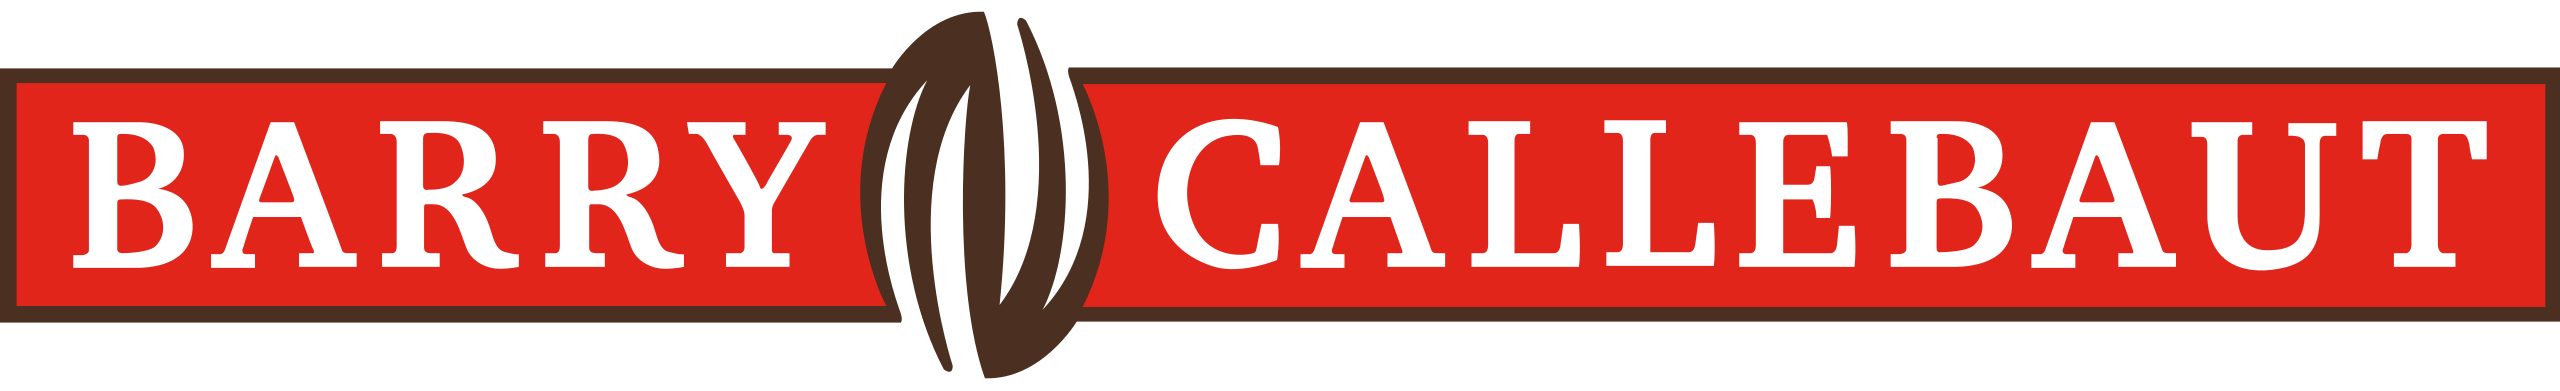 Barry Callebaut logo